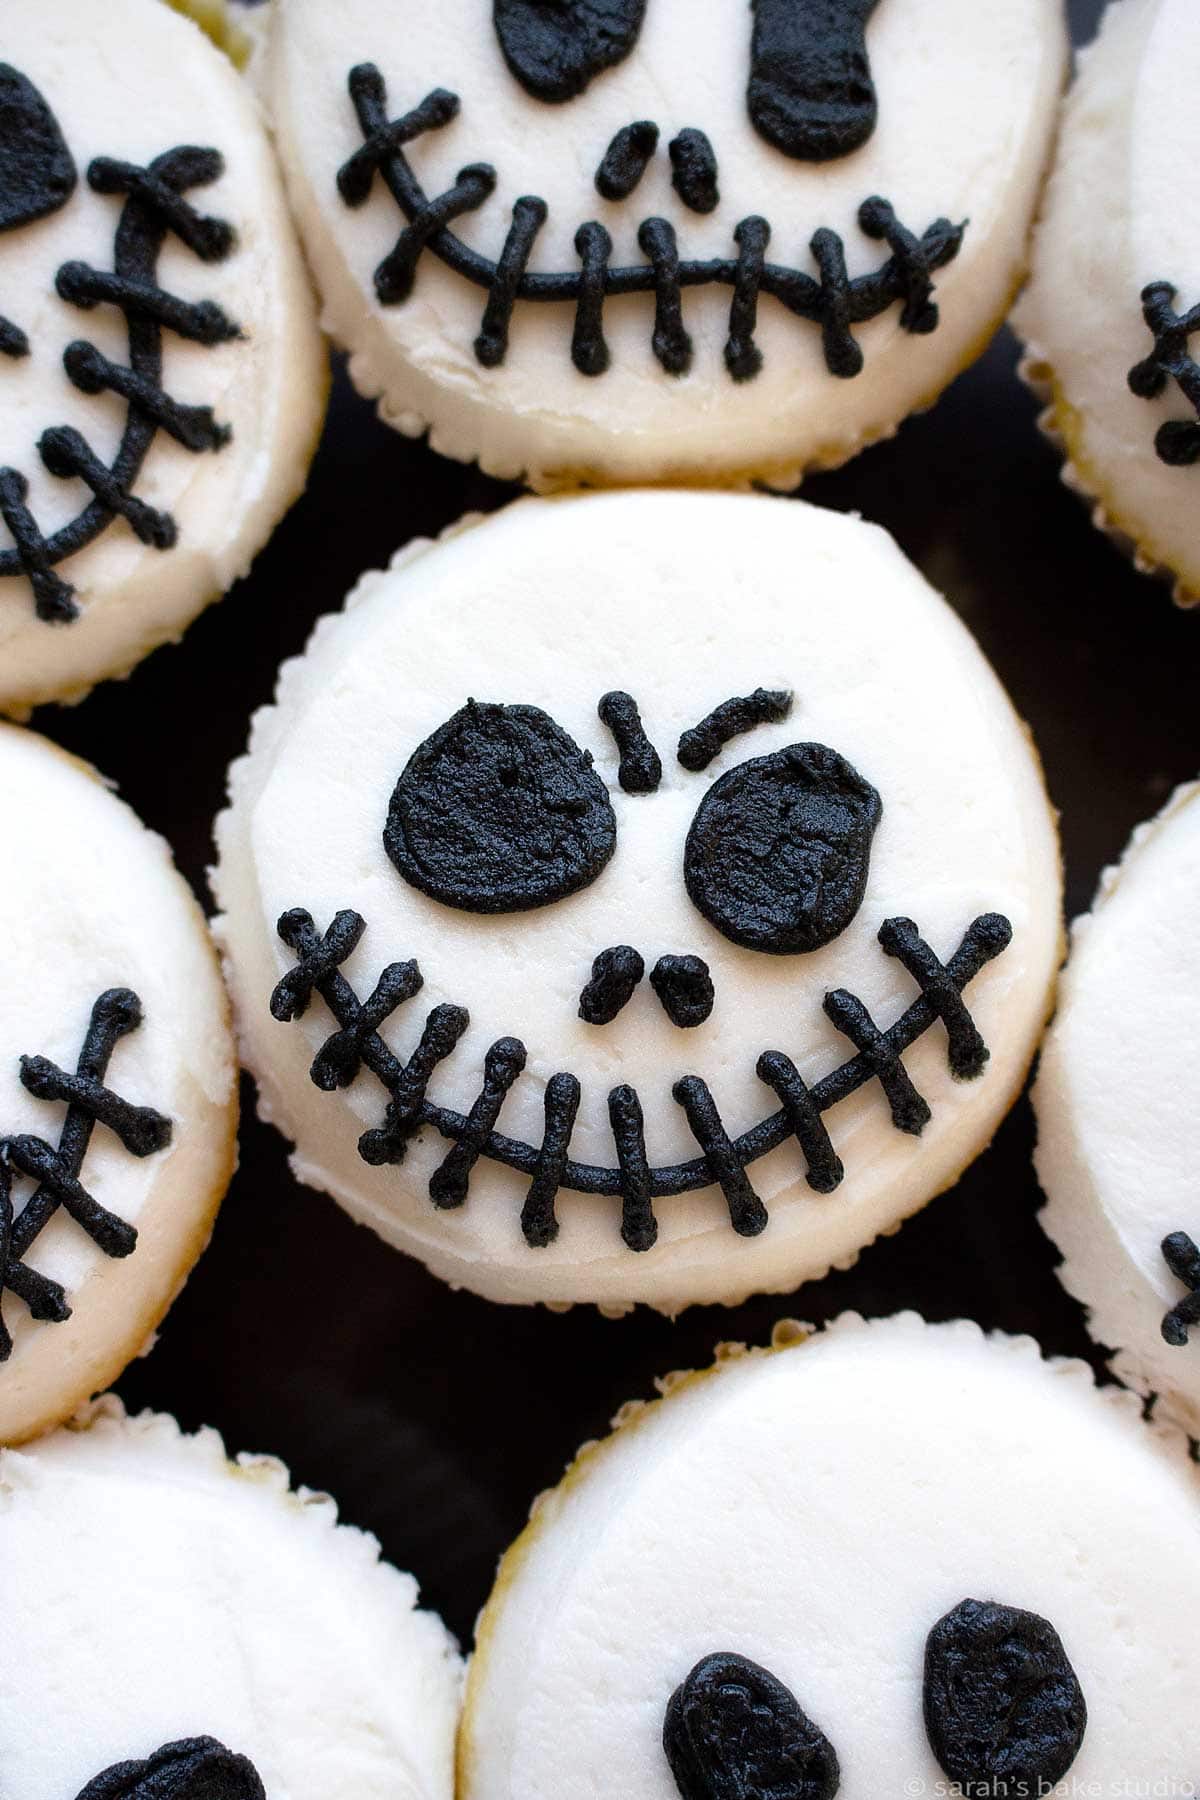 Jack Skeleton Cupcakes up-close.